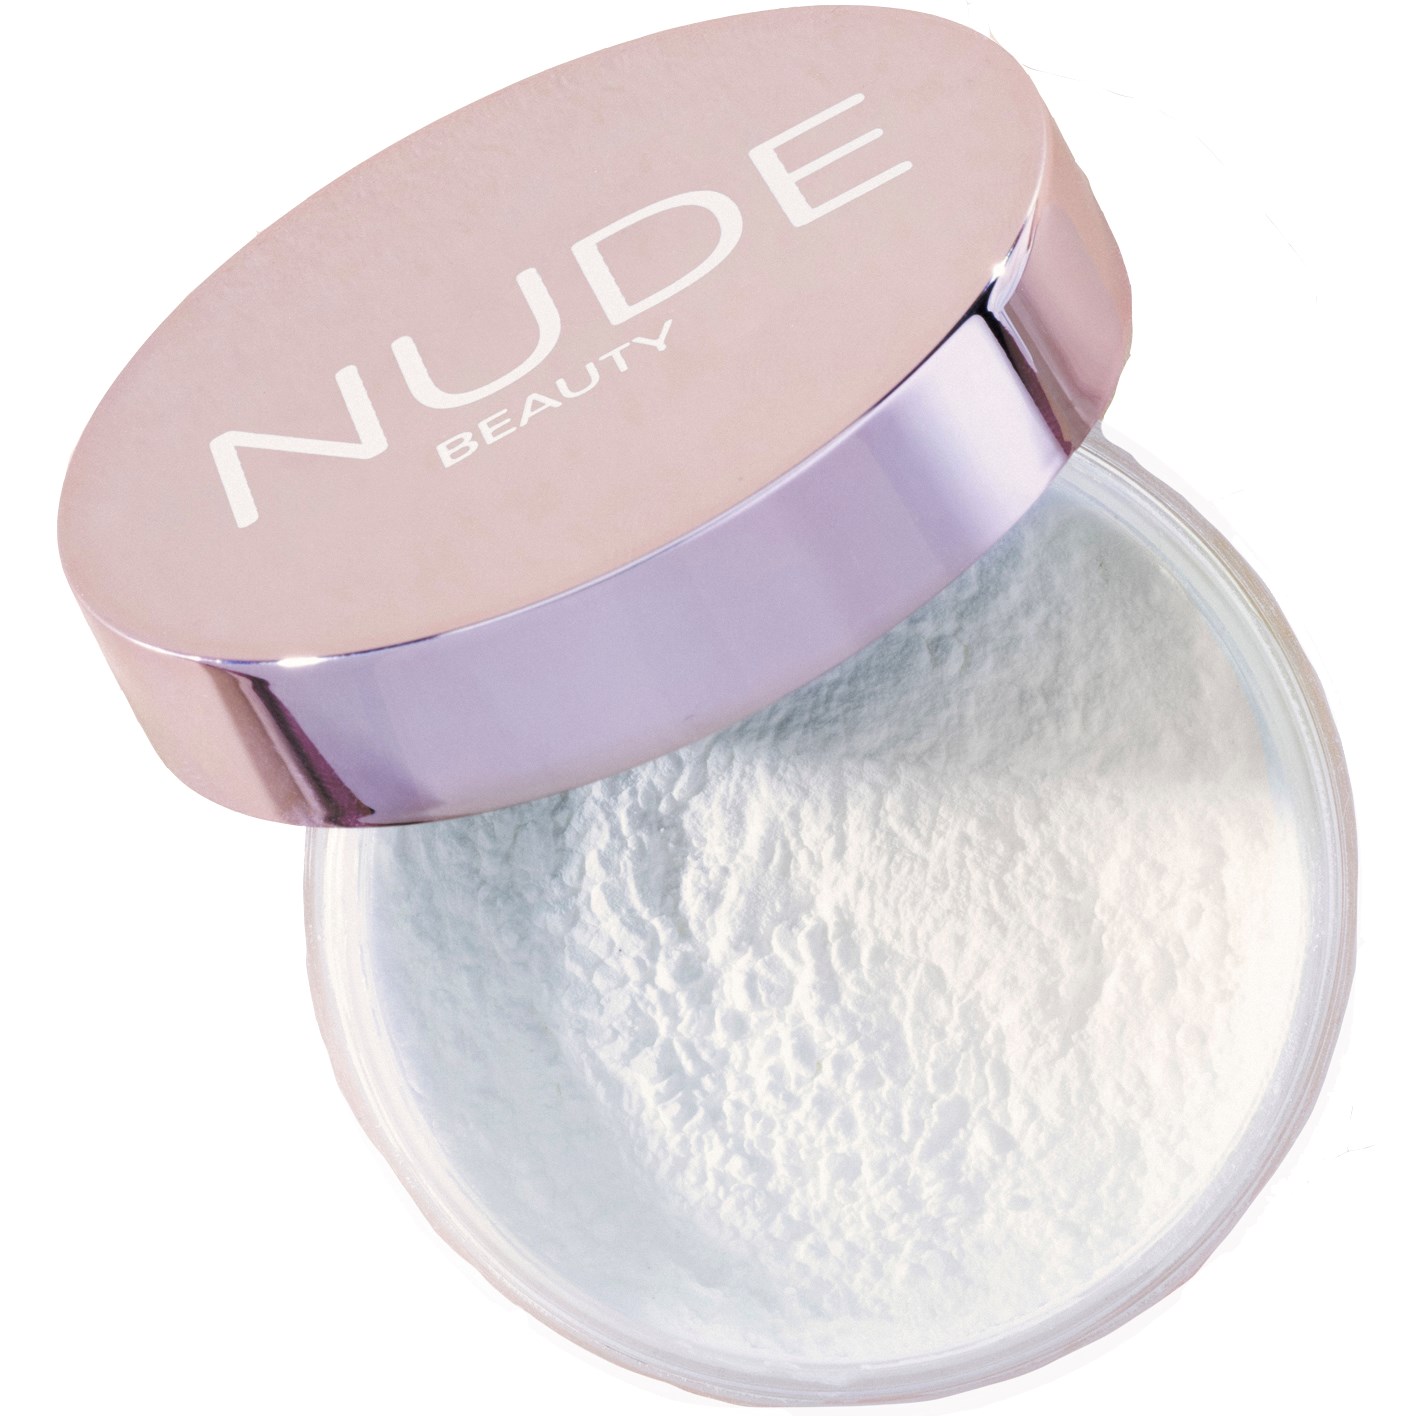 Bilde av Nude Beauty Ready Set Go Translucent Loose Powder